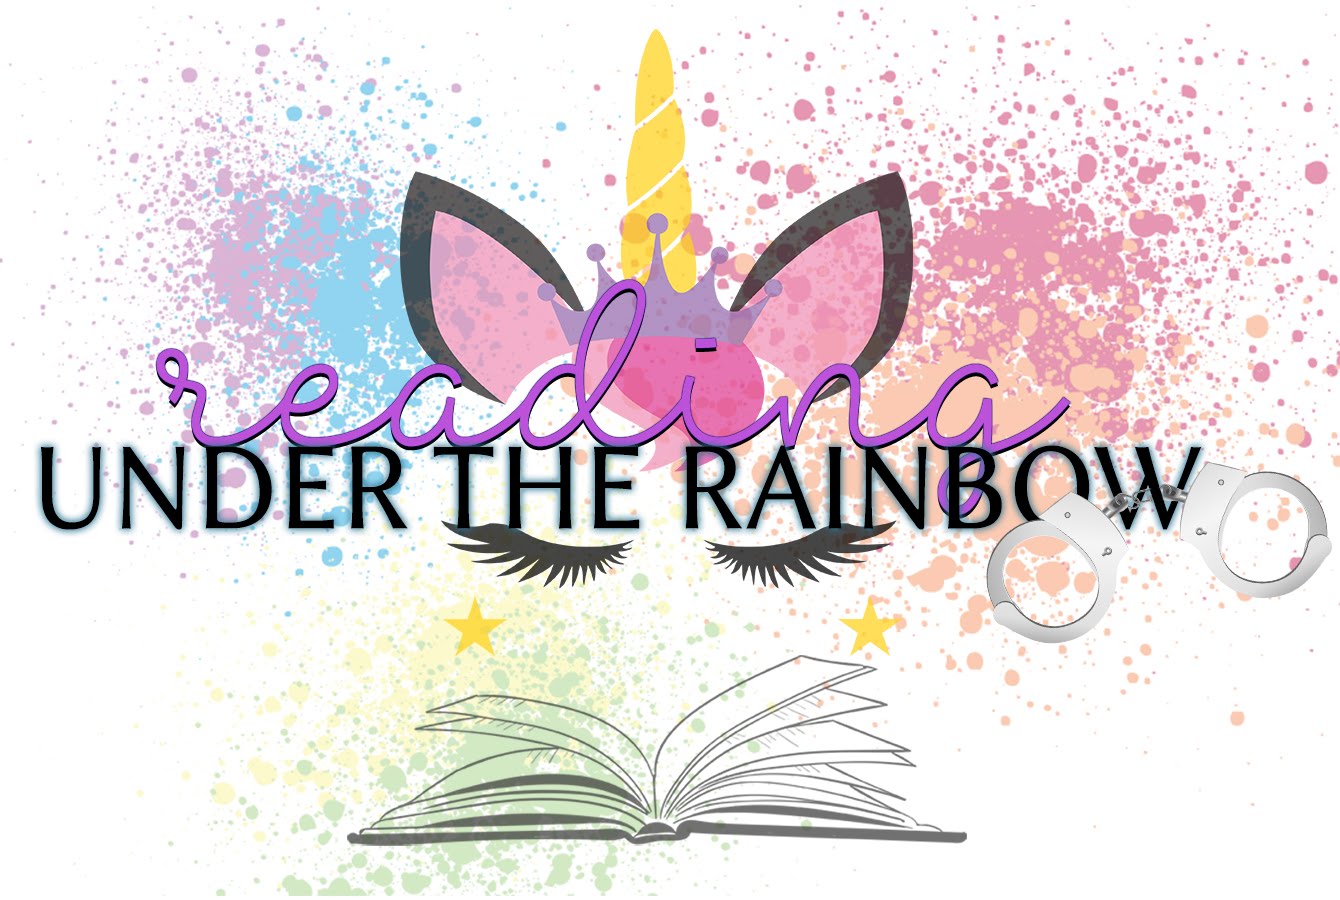 Reading under the Rainbow